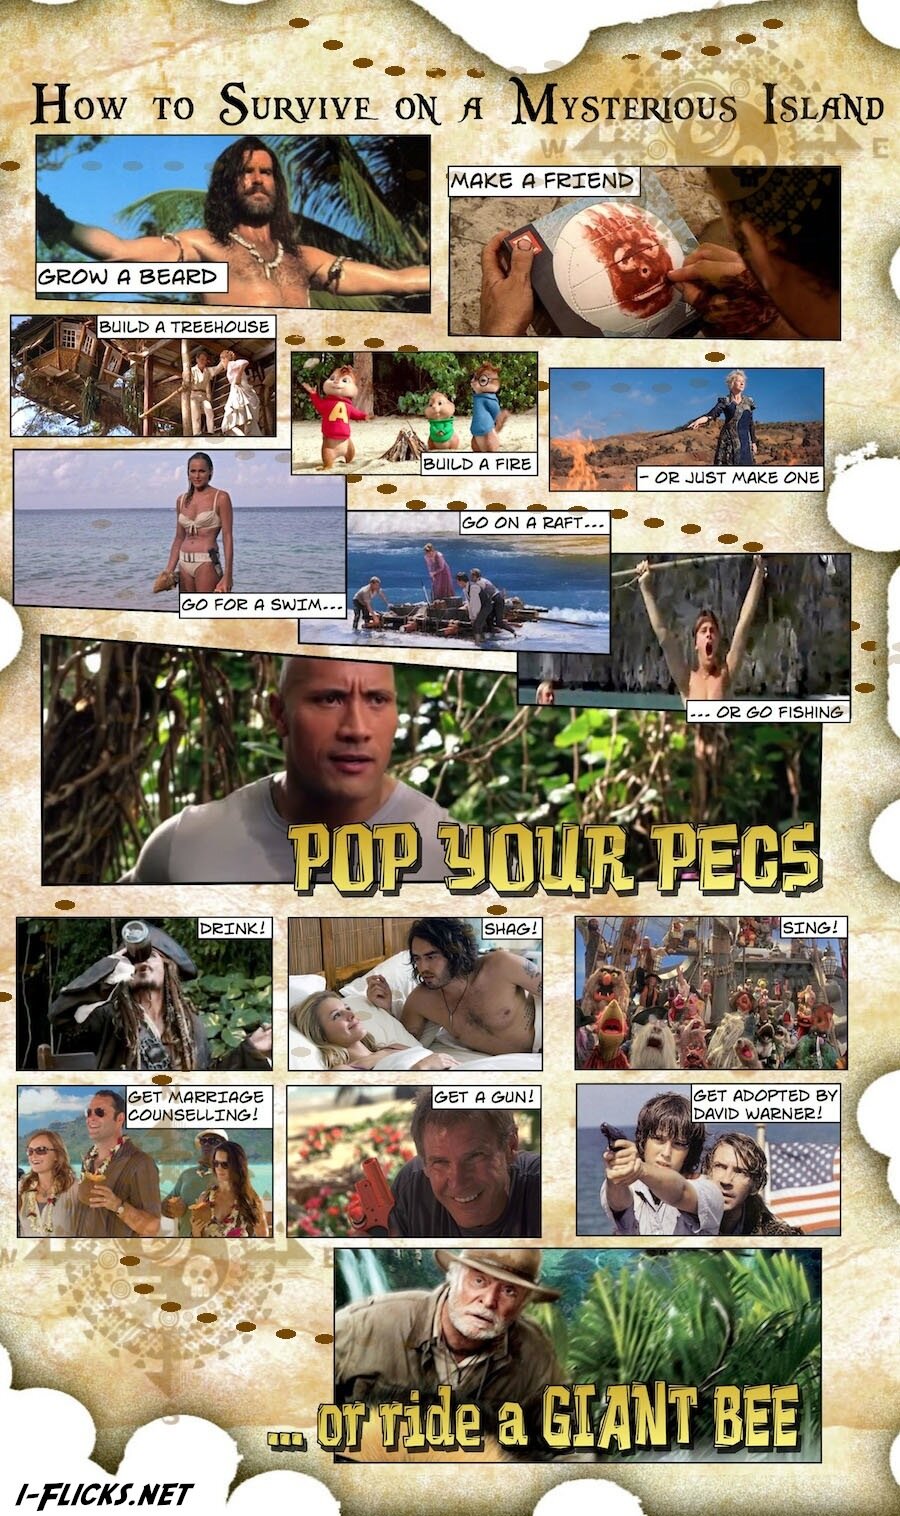 Desert Island movie survival guide